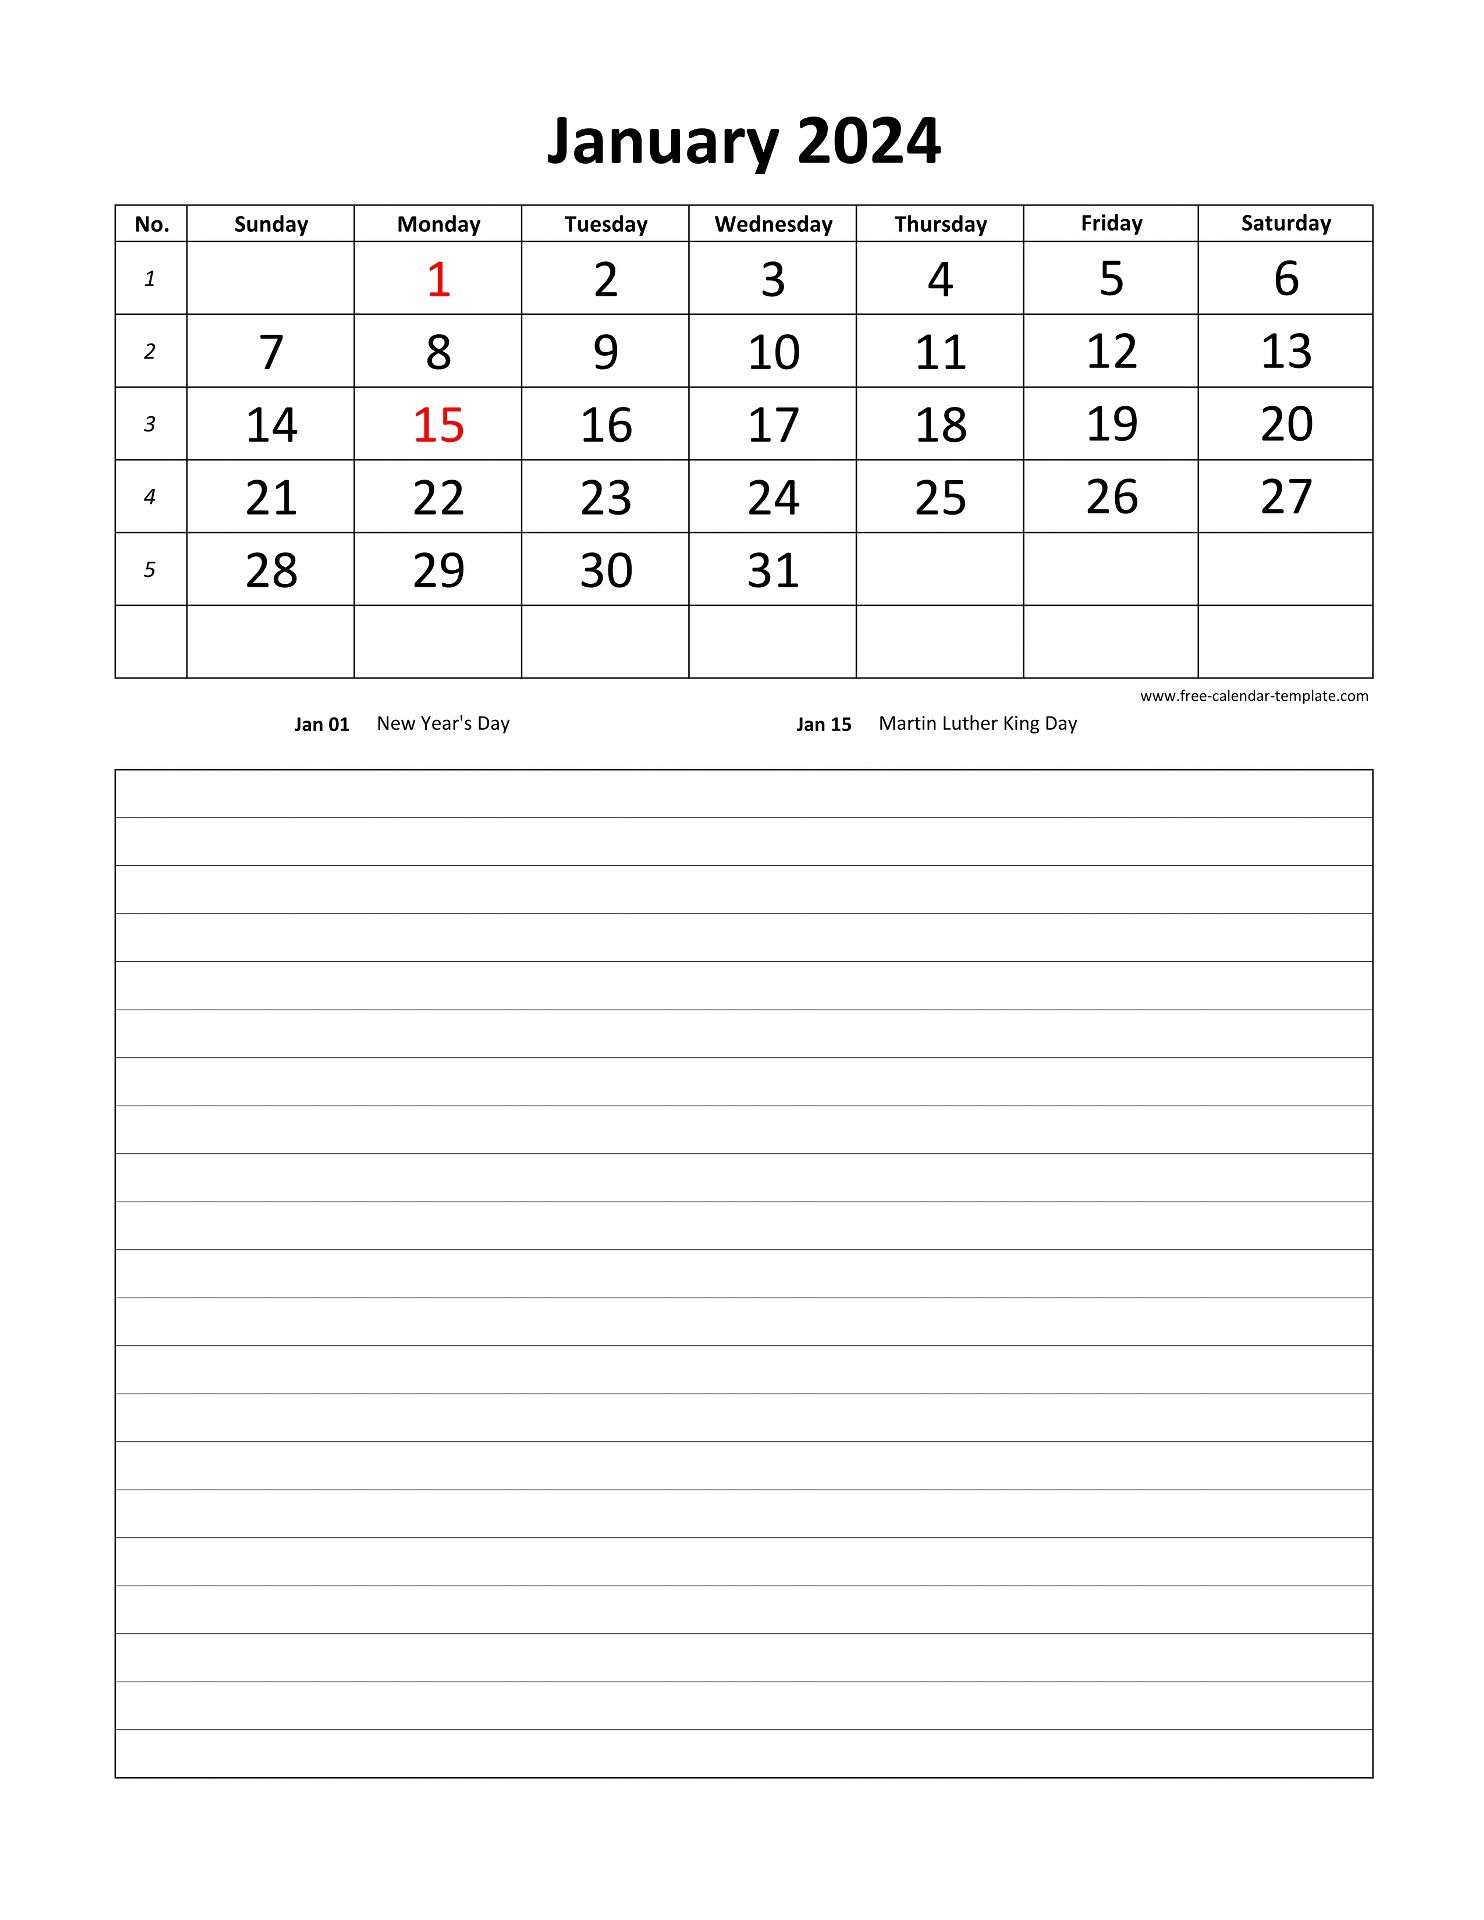 January 2024 Free Calendar Template Download Tildi Gilberte